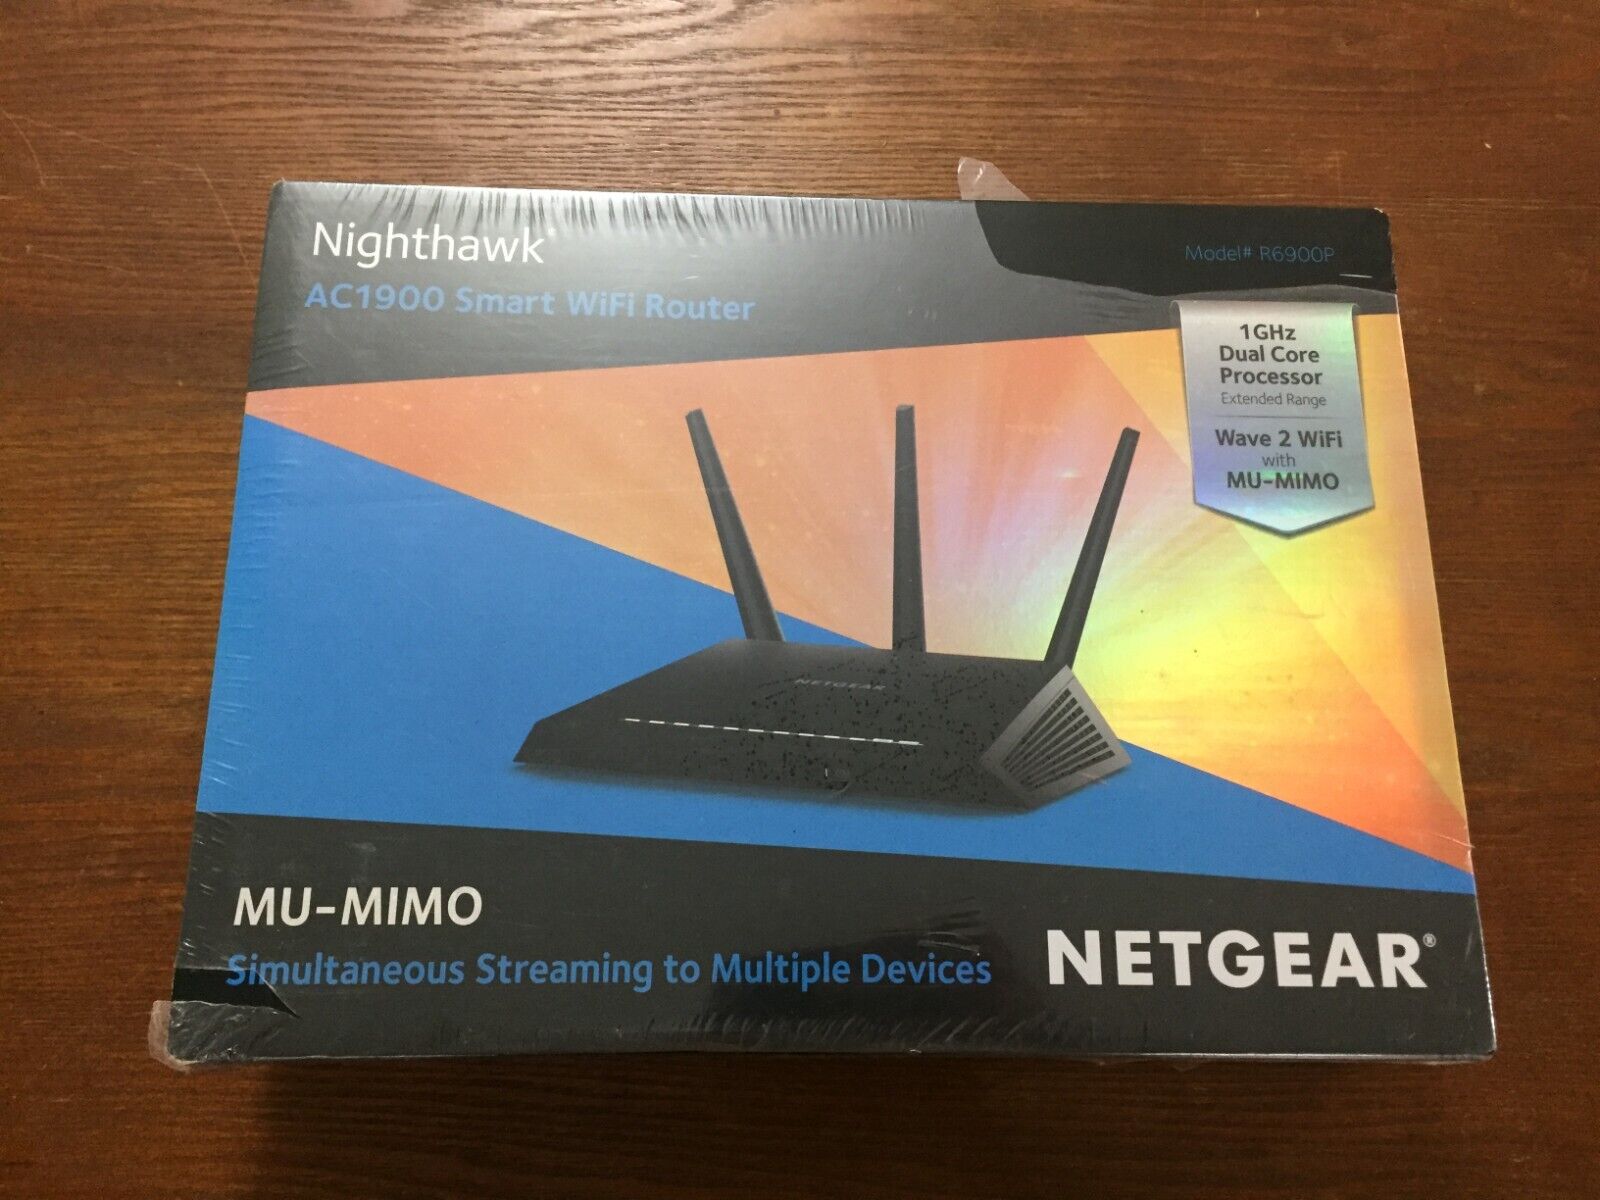 NETGEAR Nighthawk R6900P-100NAS AC1900 Dual Band WiFi Router - New - Sealed